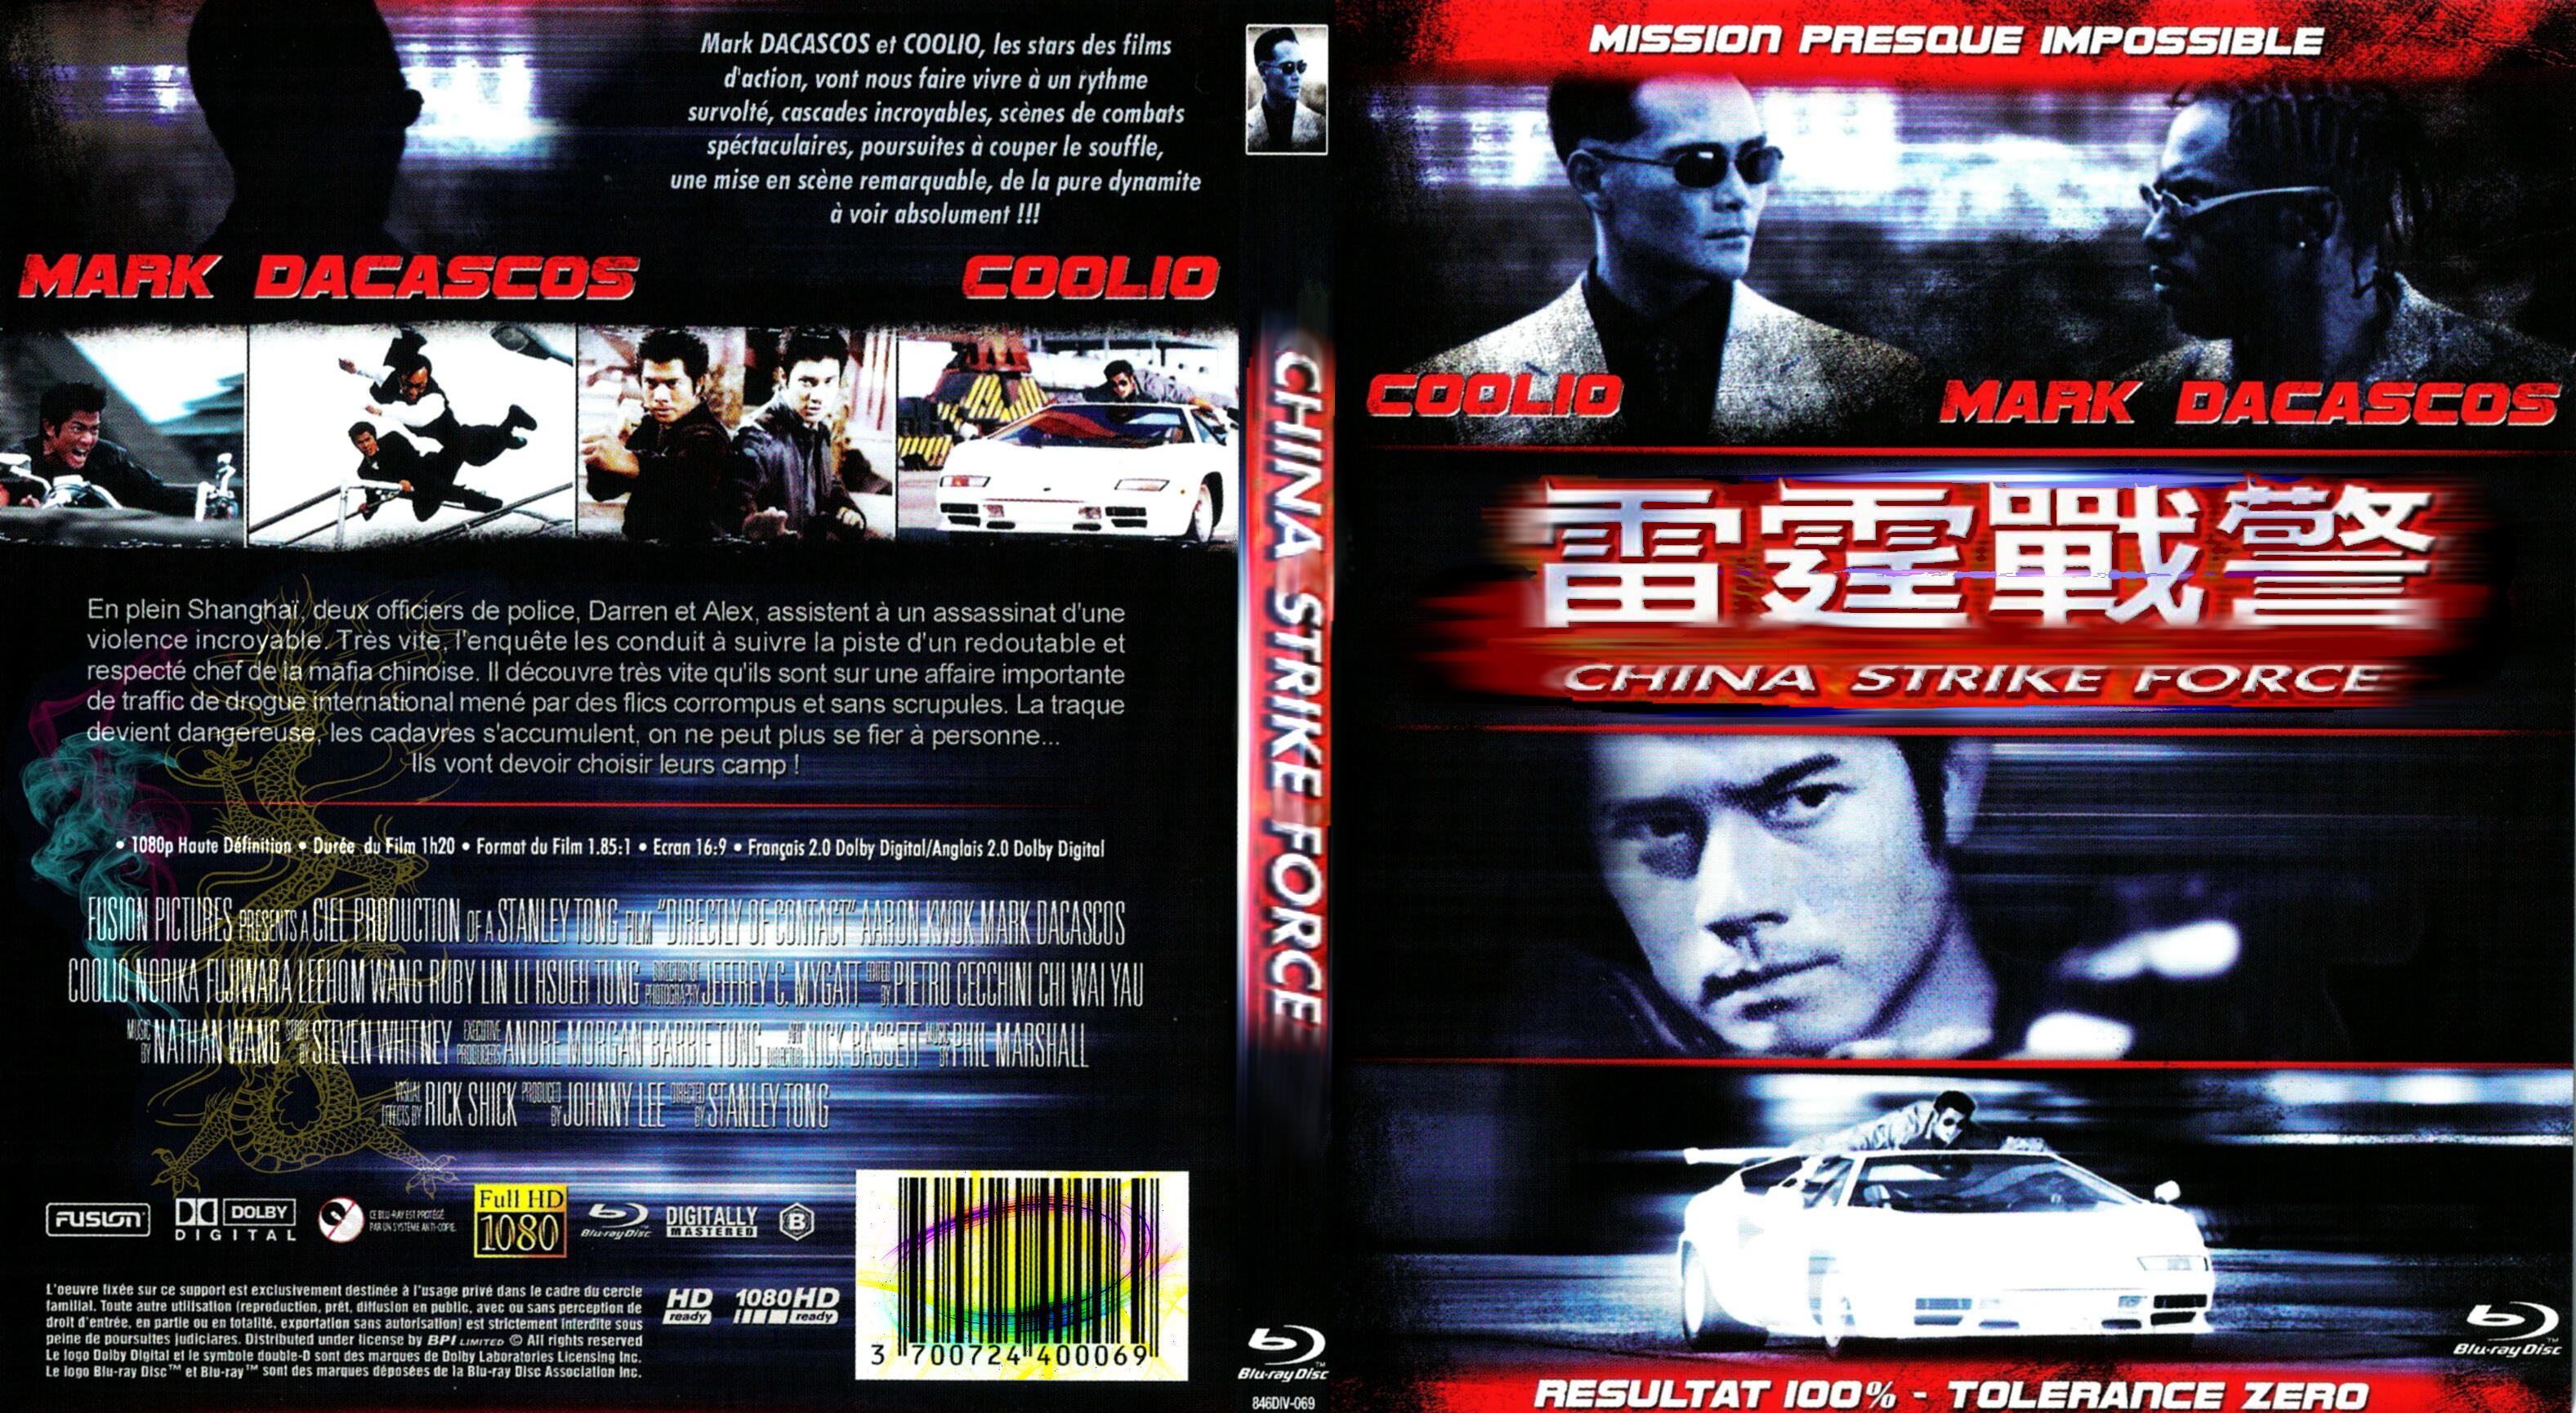 Jaquette DVD China strike force custom (BLU-RAY)